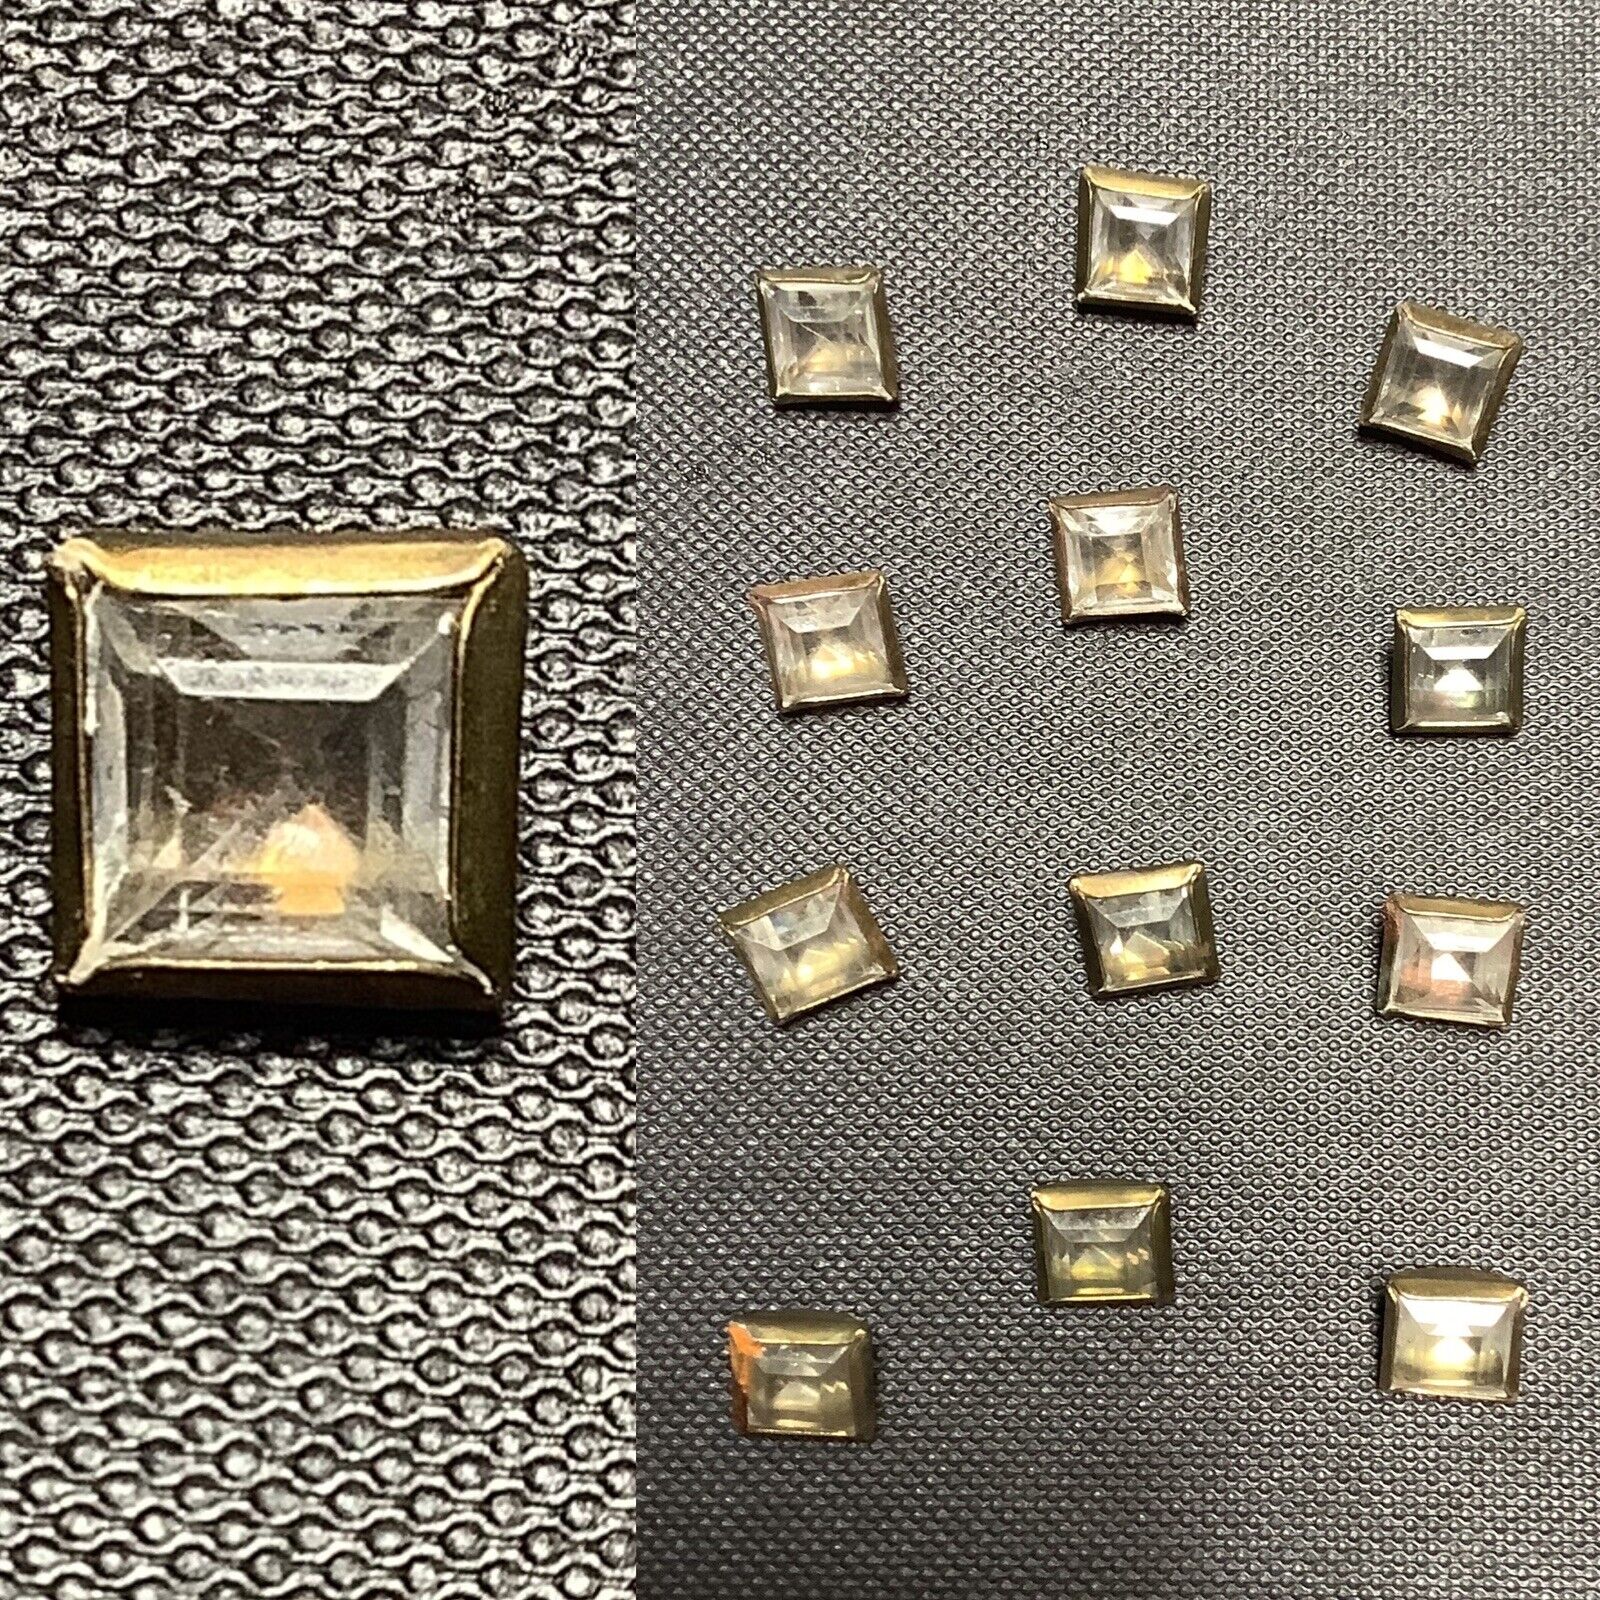 VTG 1930-40’ Lot of 12 Art Deco Square Crystal Buttons Set In Brass Metal Frame